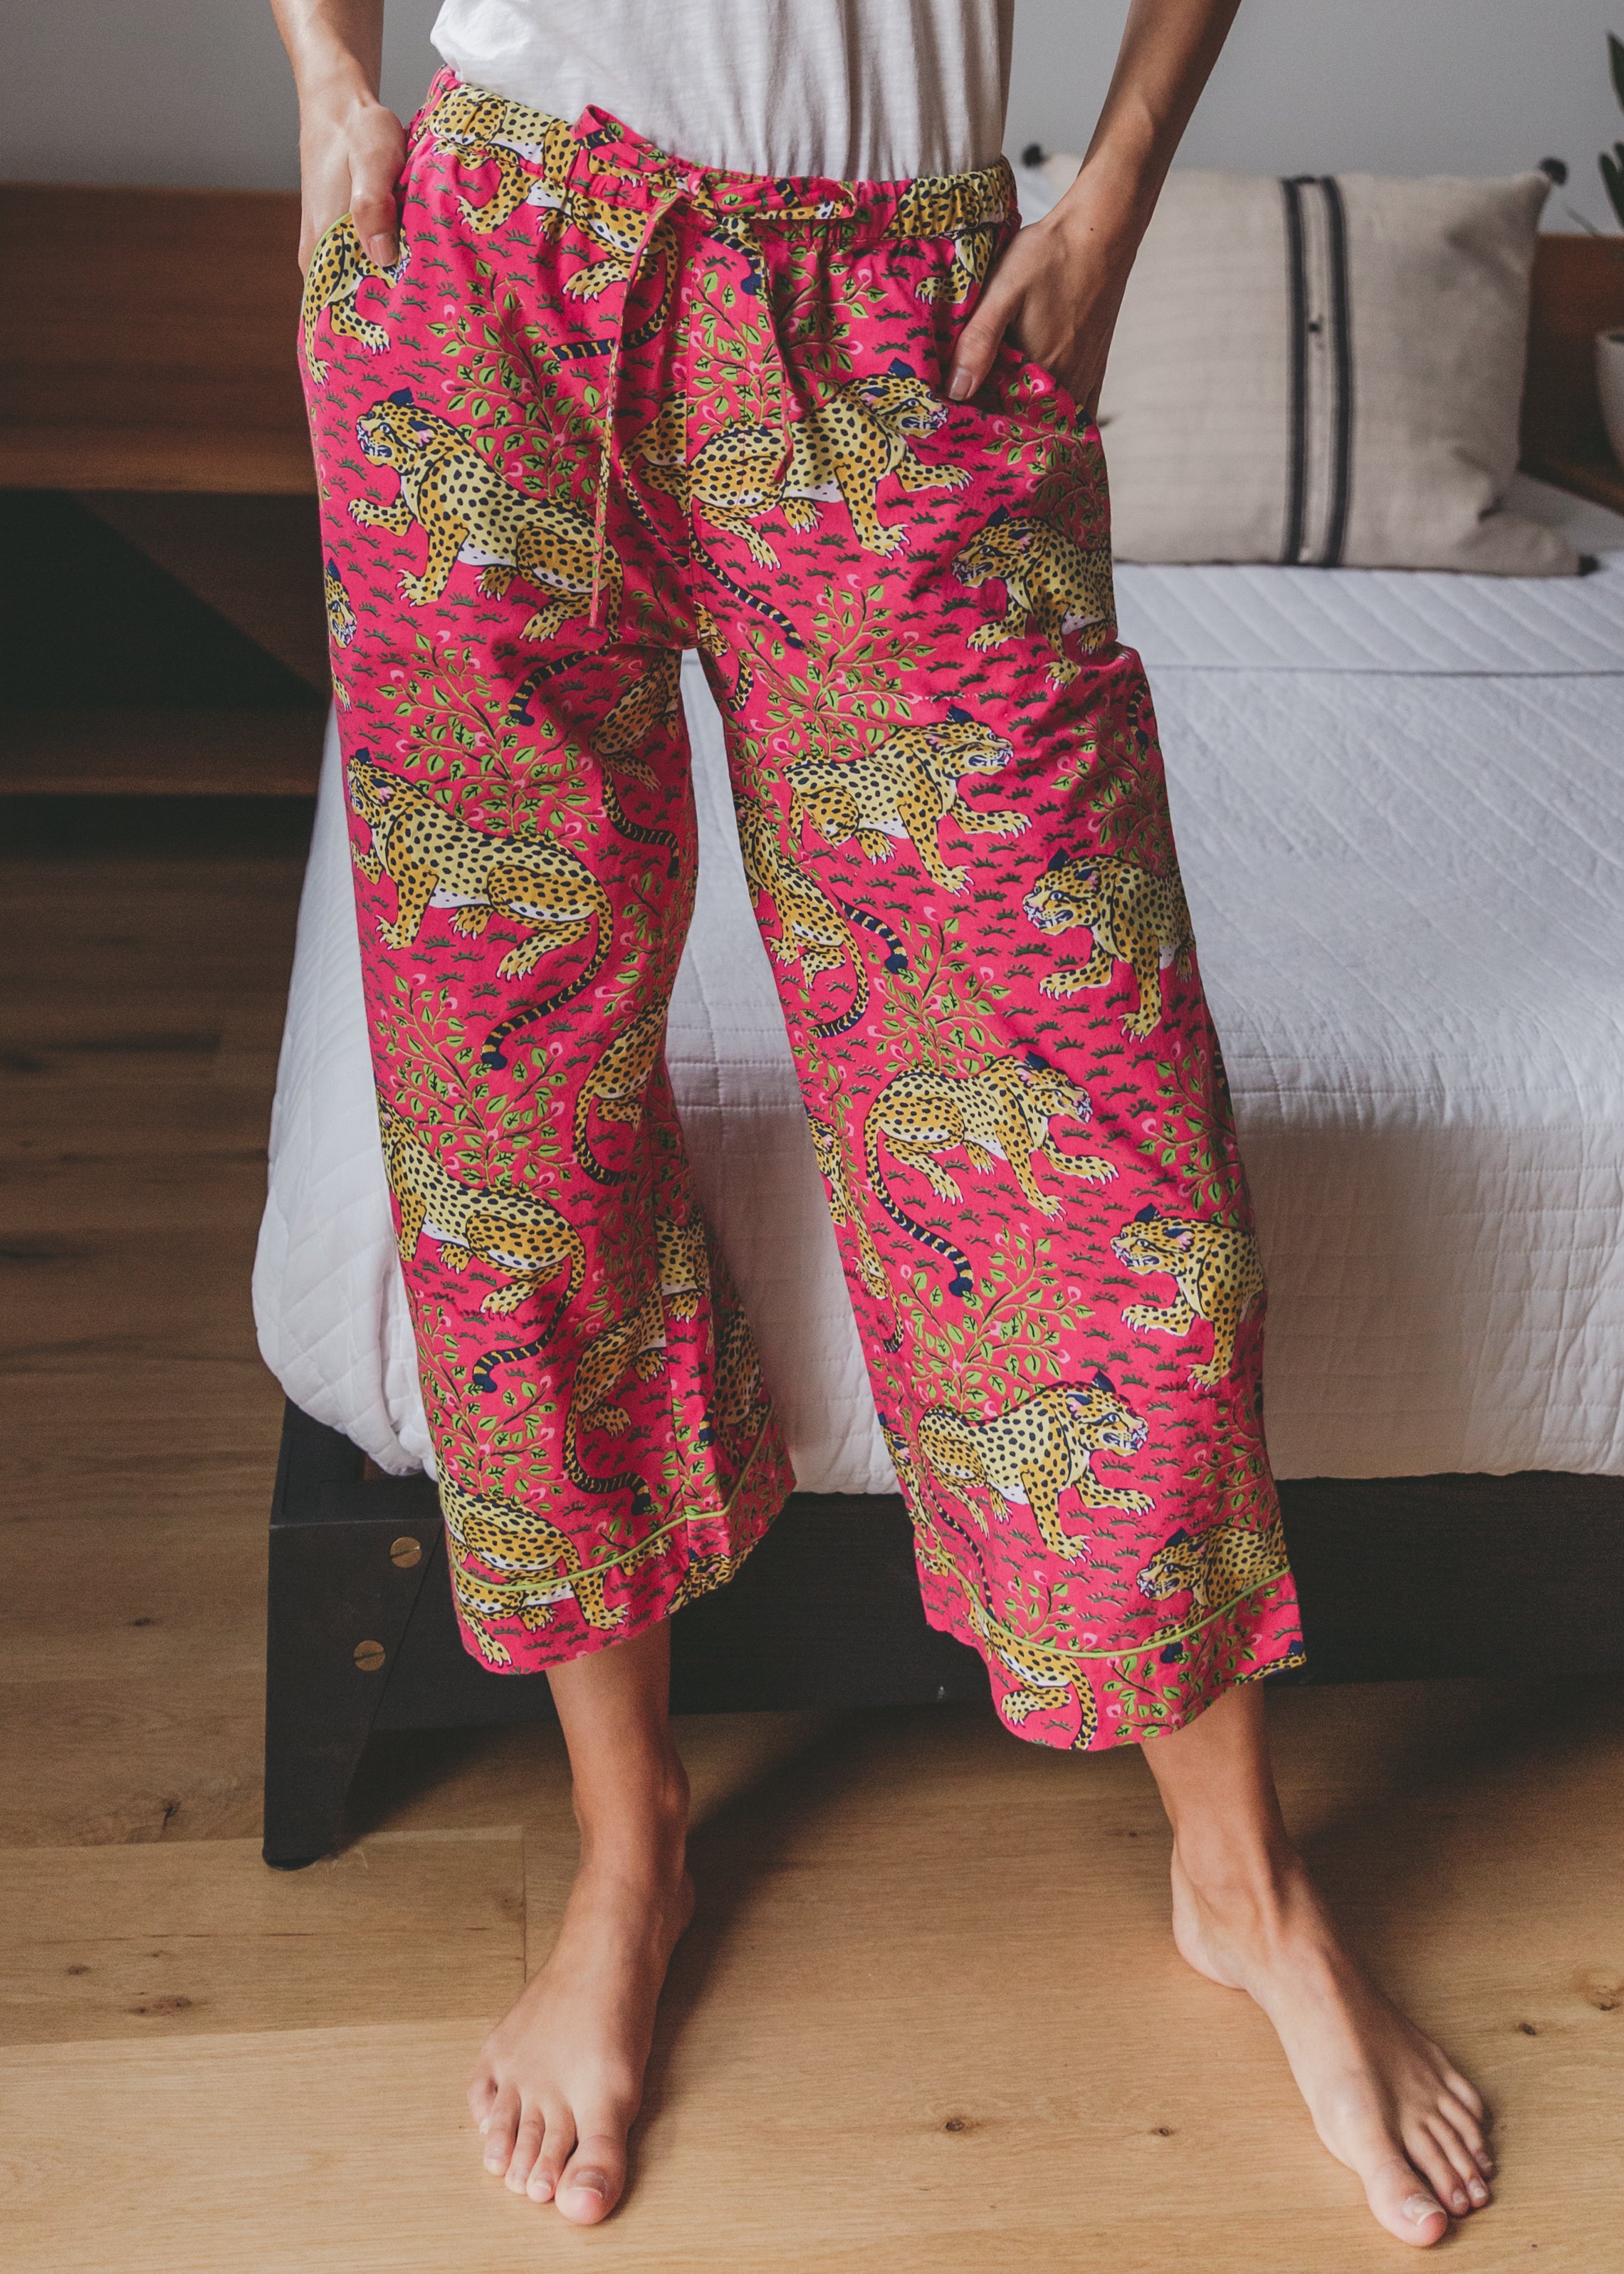 Bagheera - Pajama Pants - Hot Pink